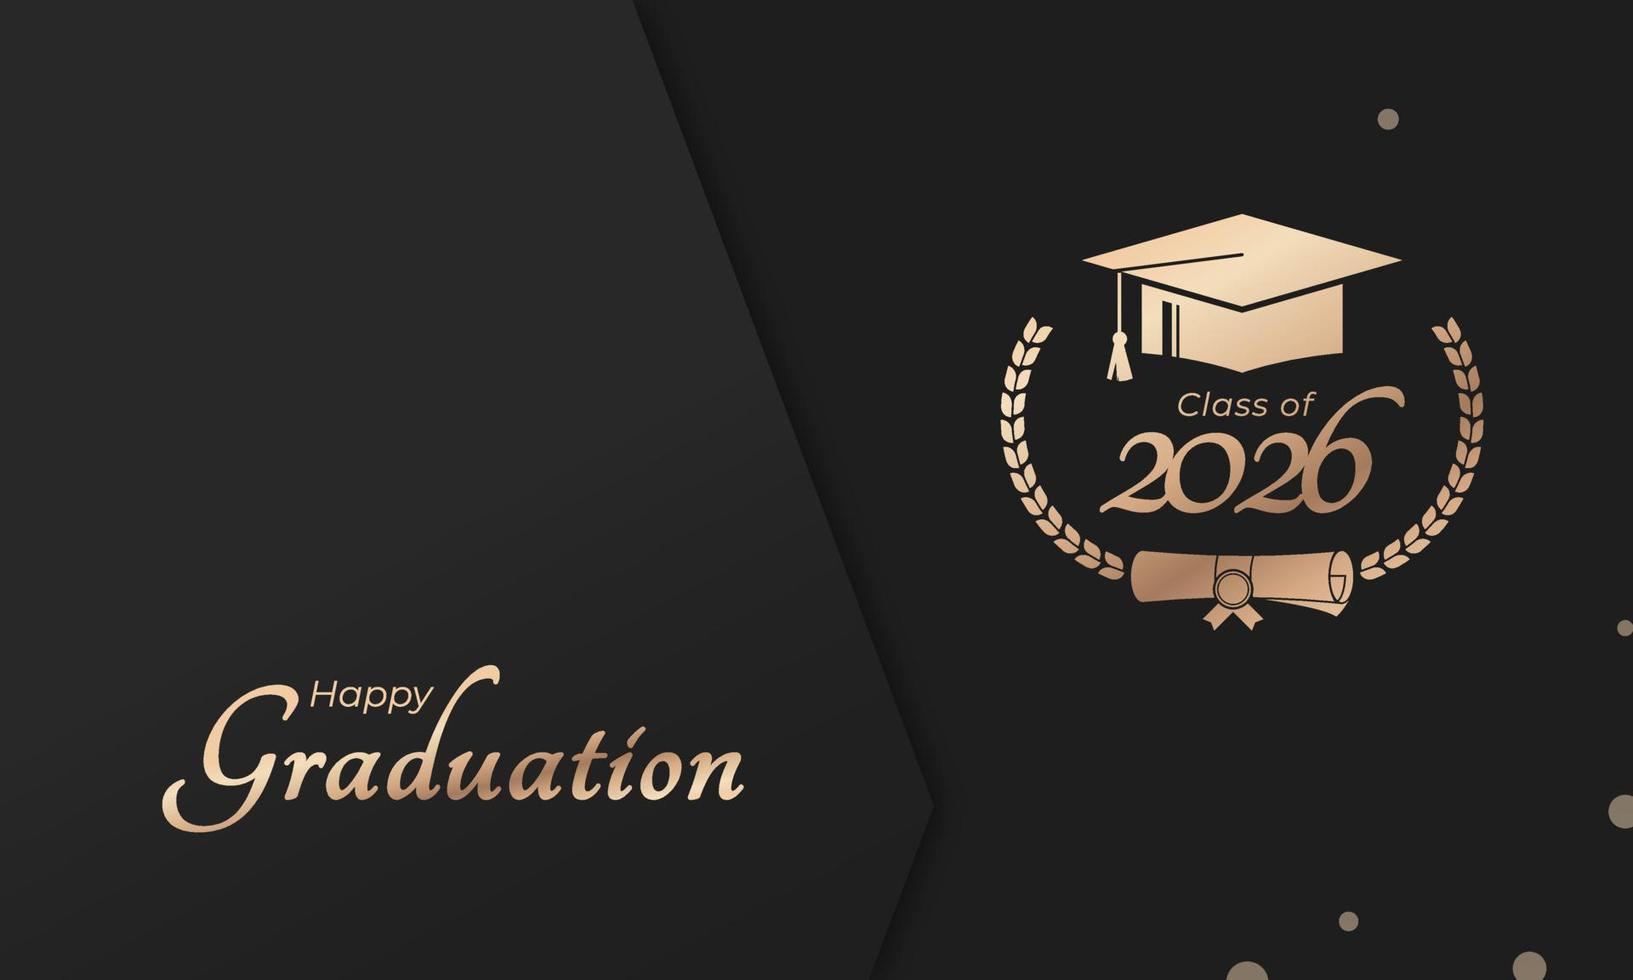 Class of 2026 Year Graduation of Decorate Congratulation with Laurel Wreath for School Graduates vector